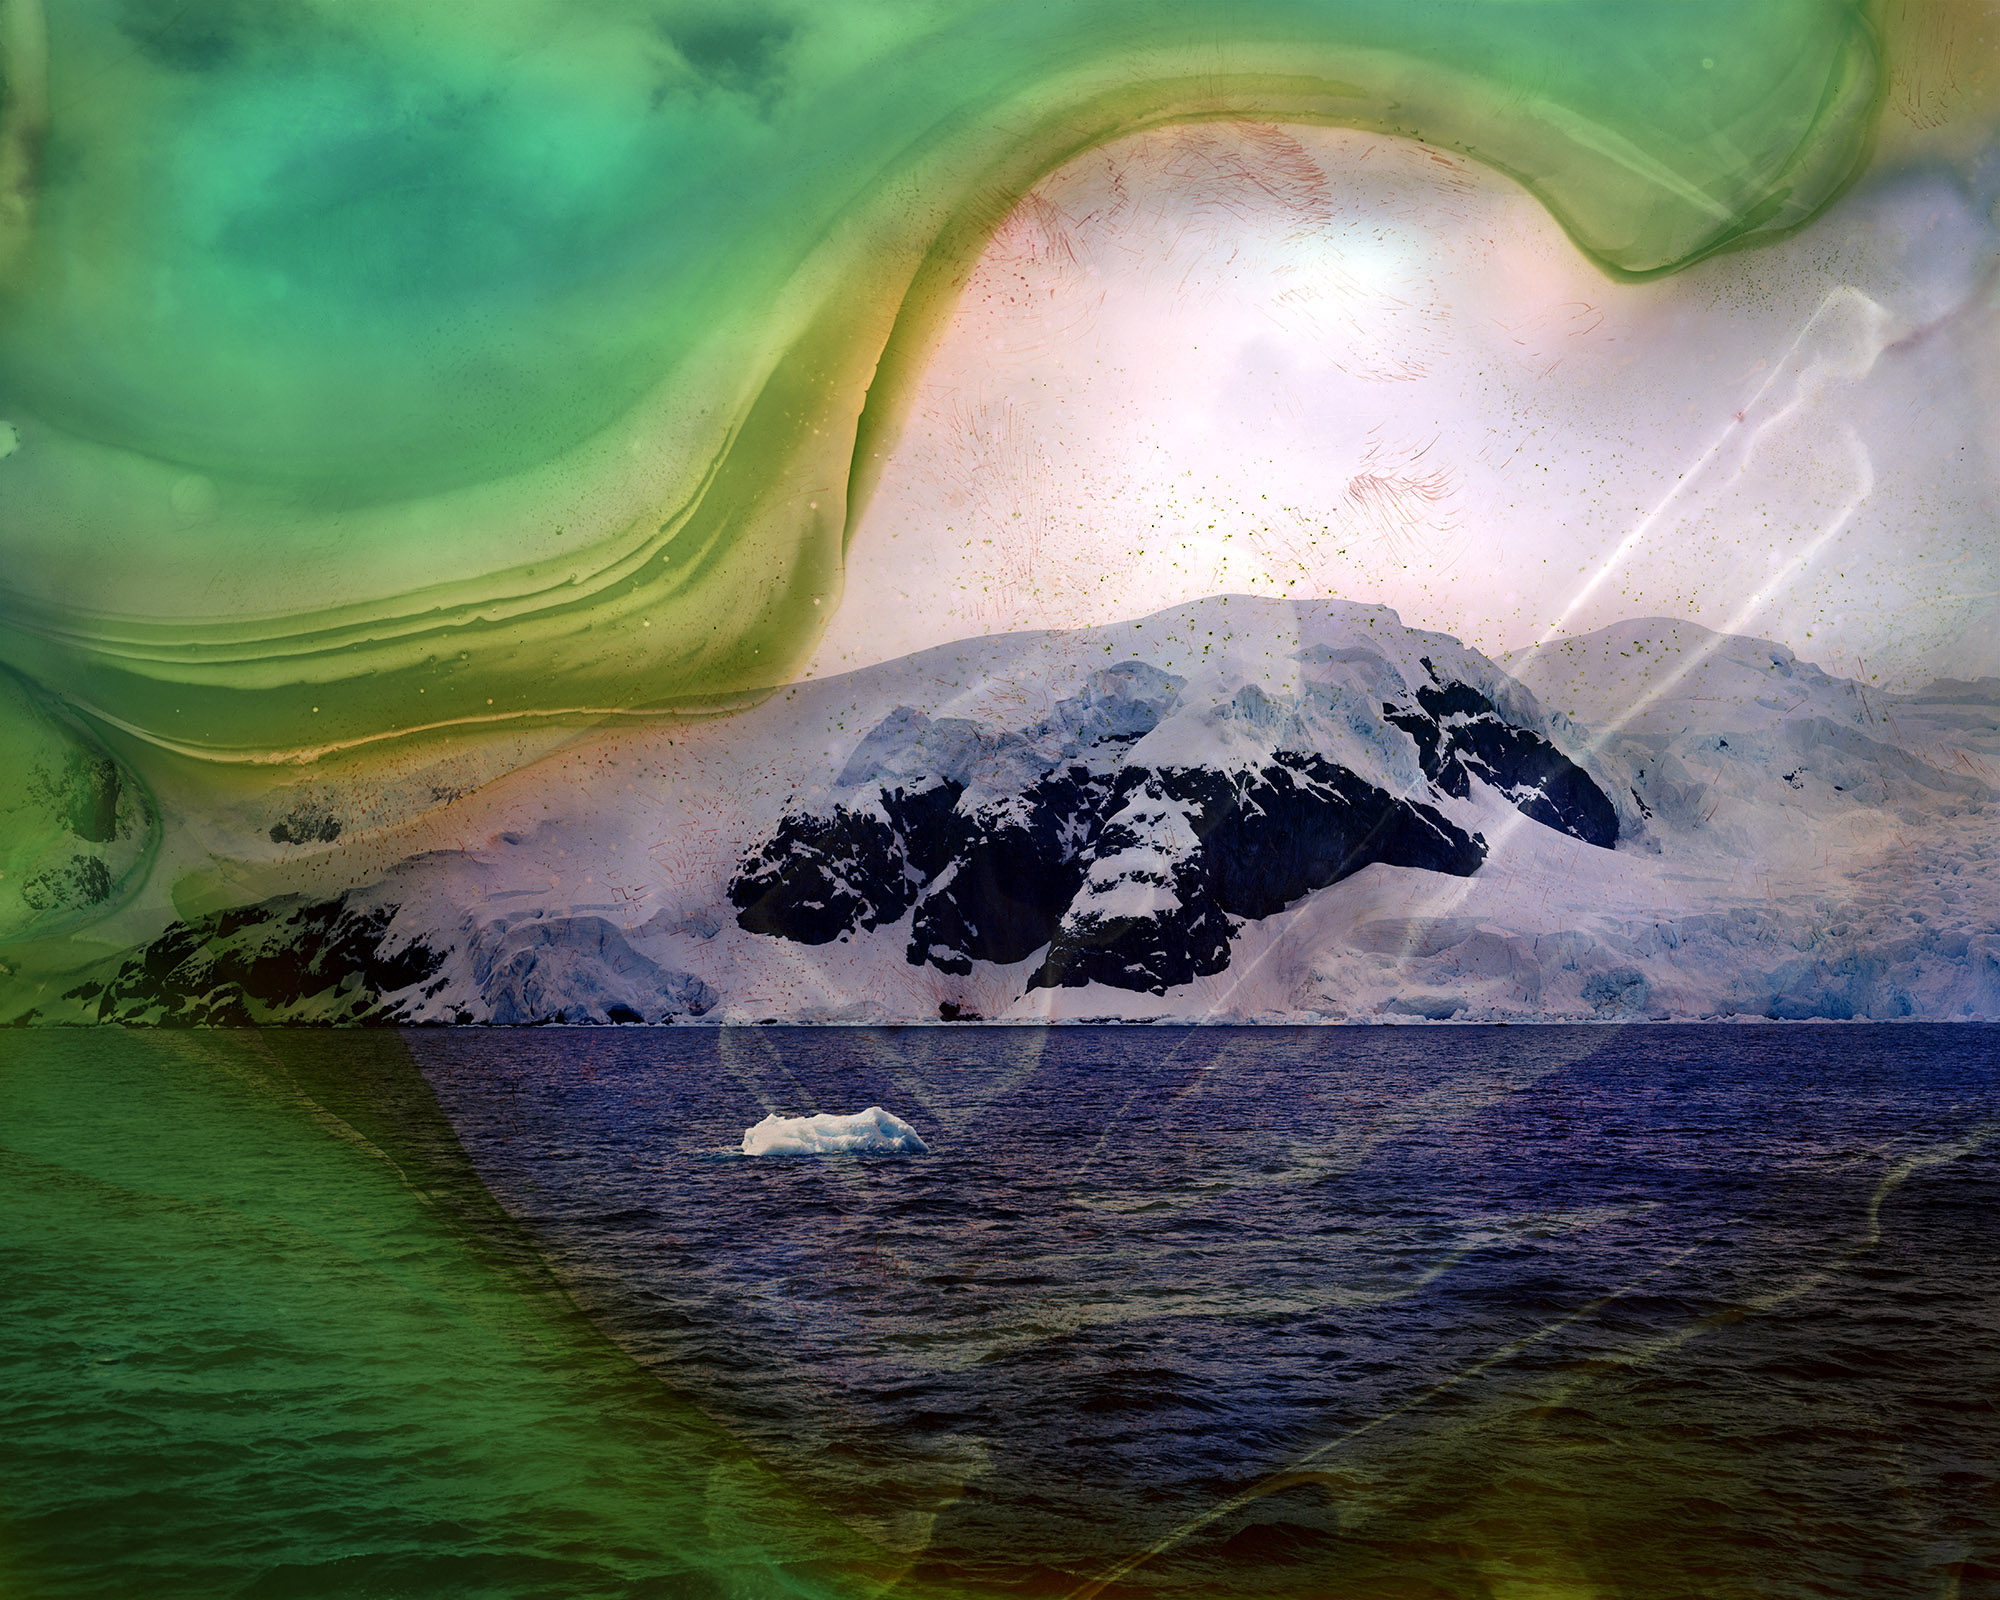     Ella Morton, Antarctica #1, 2022. Lightjet print from soaked film

